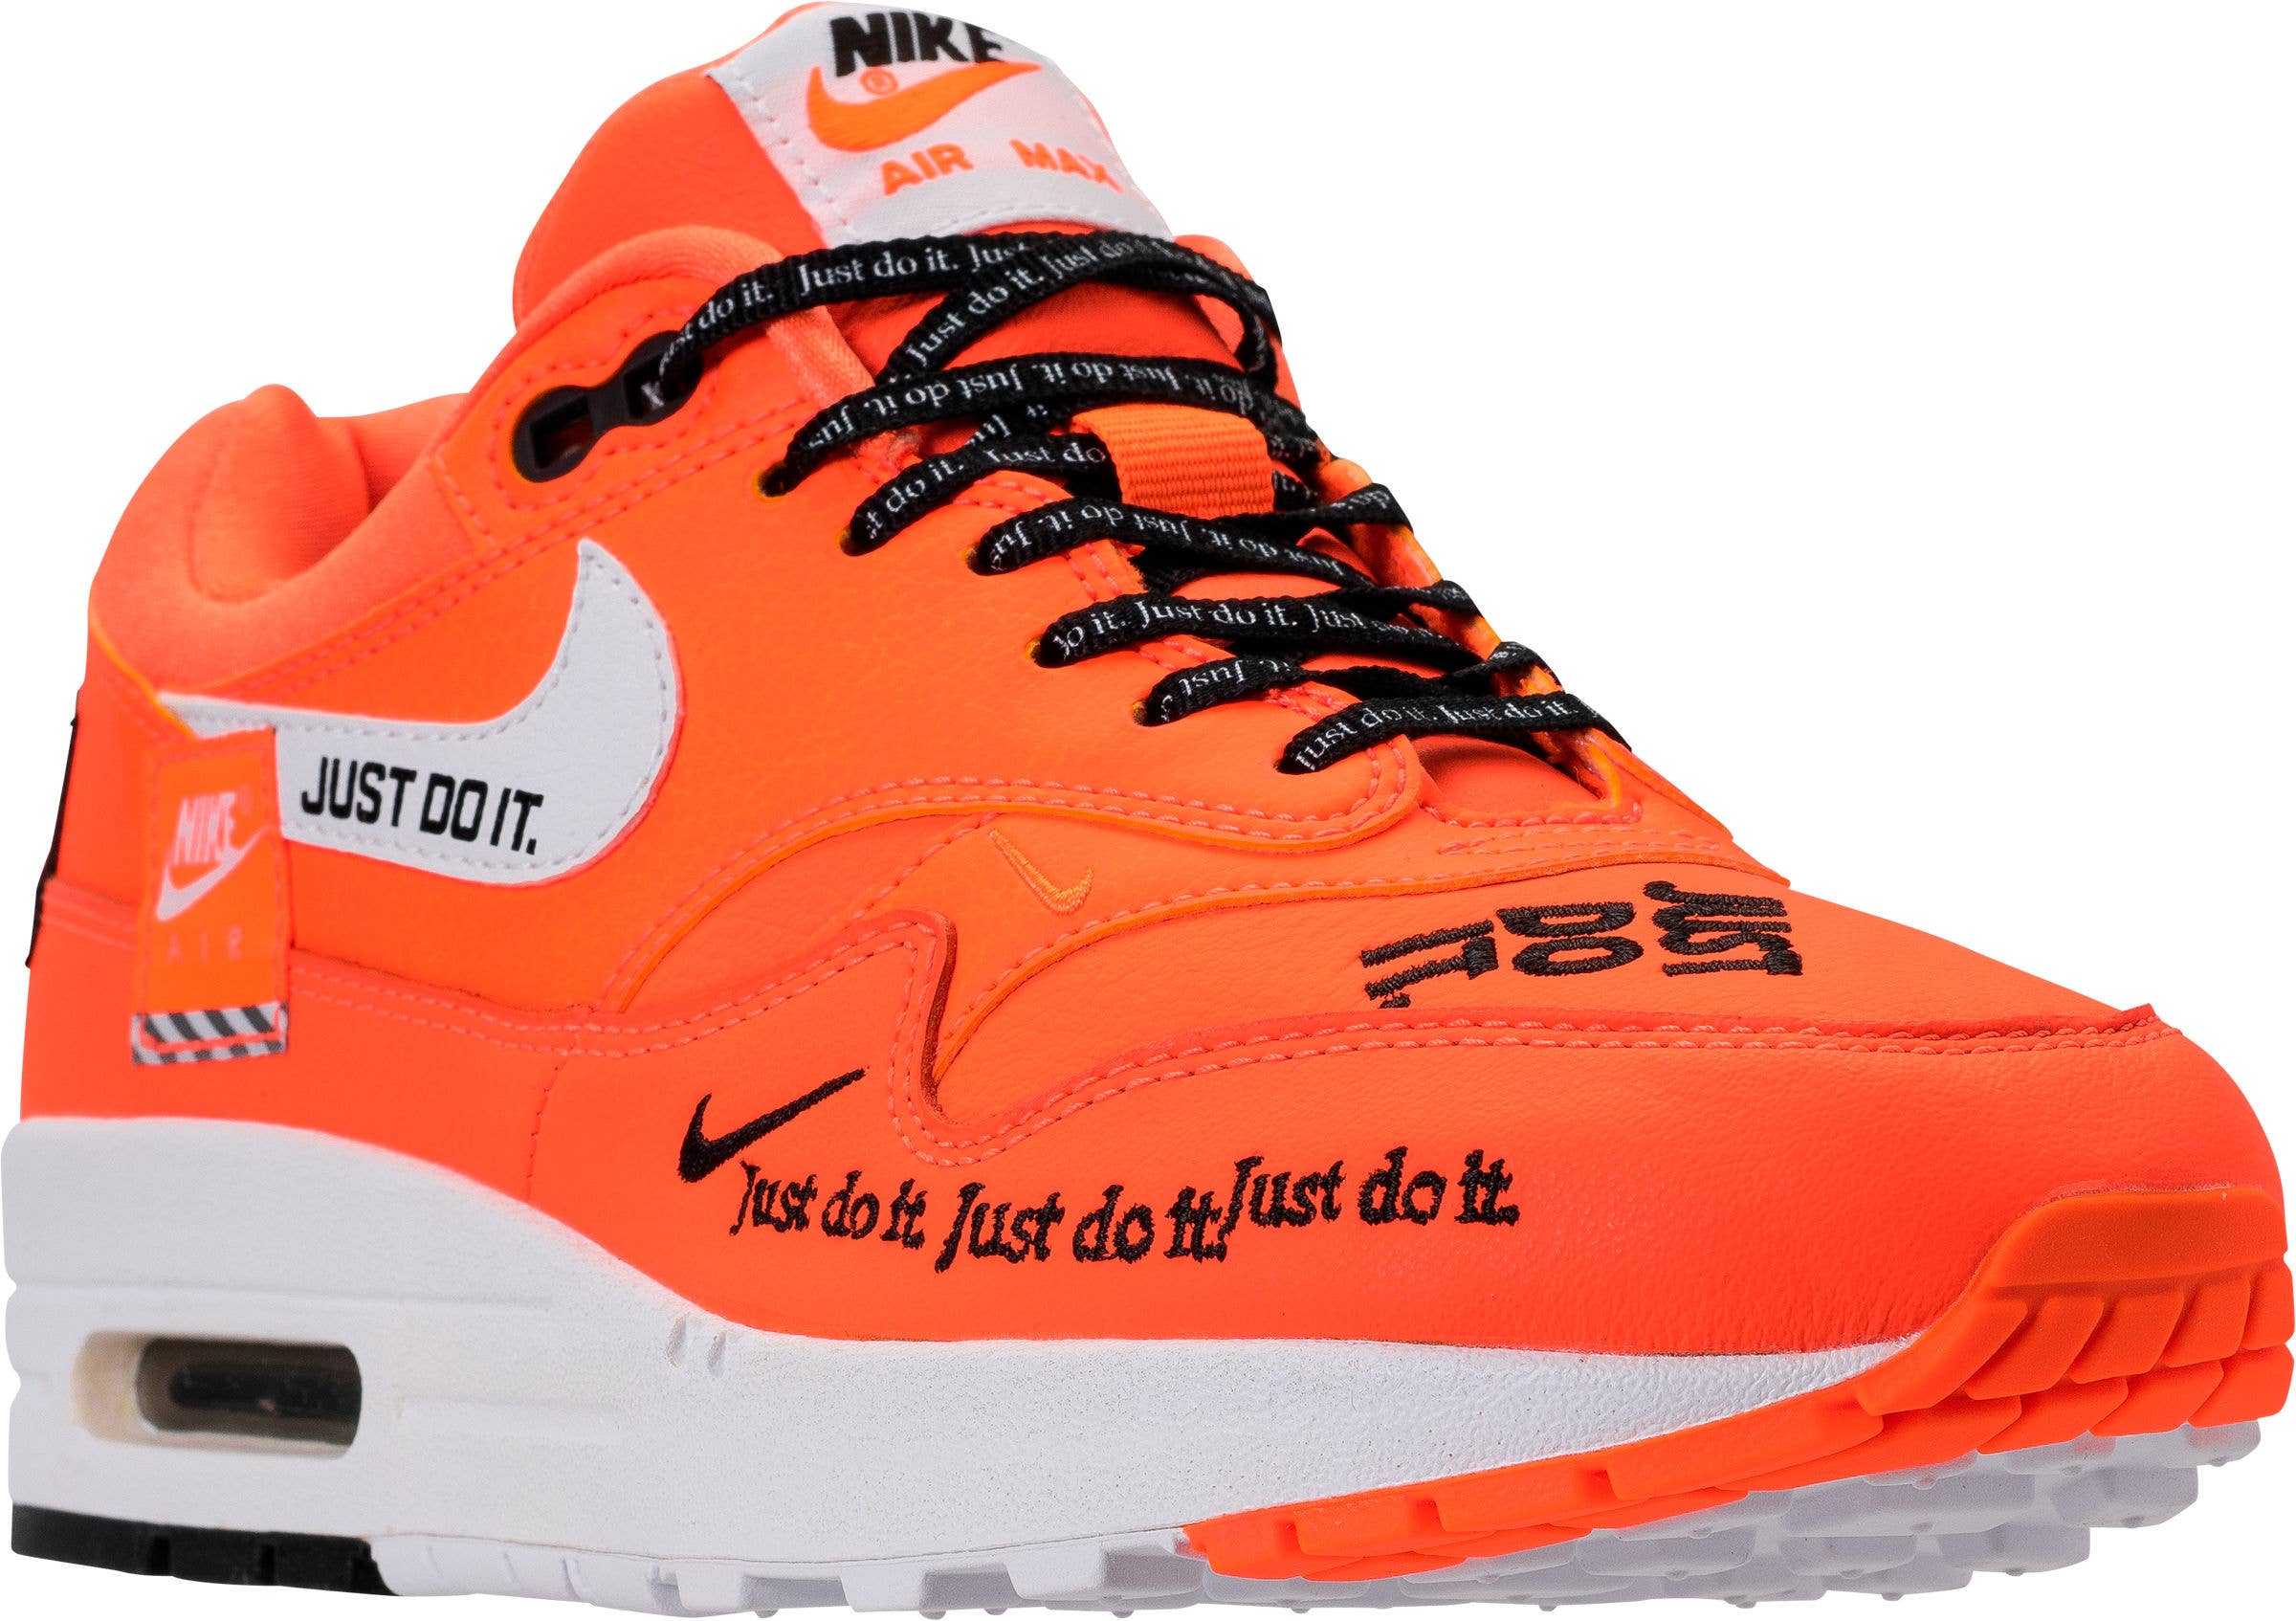 Nike Air Max 1 Just Do It Orange Release Date 917691 800 Main